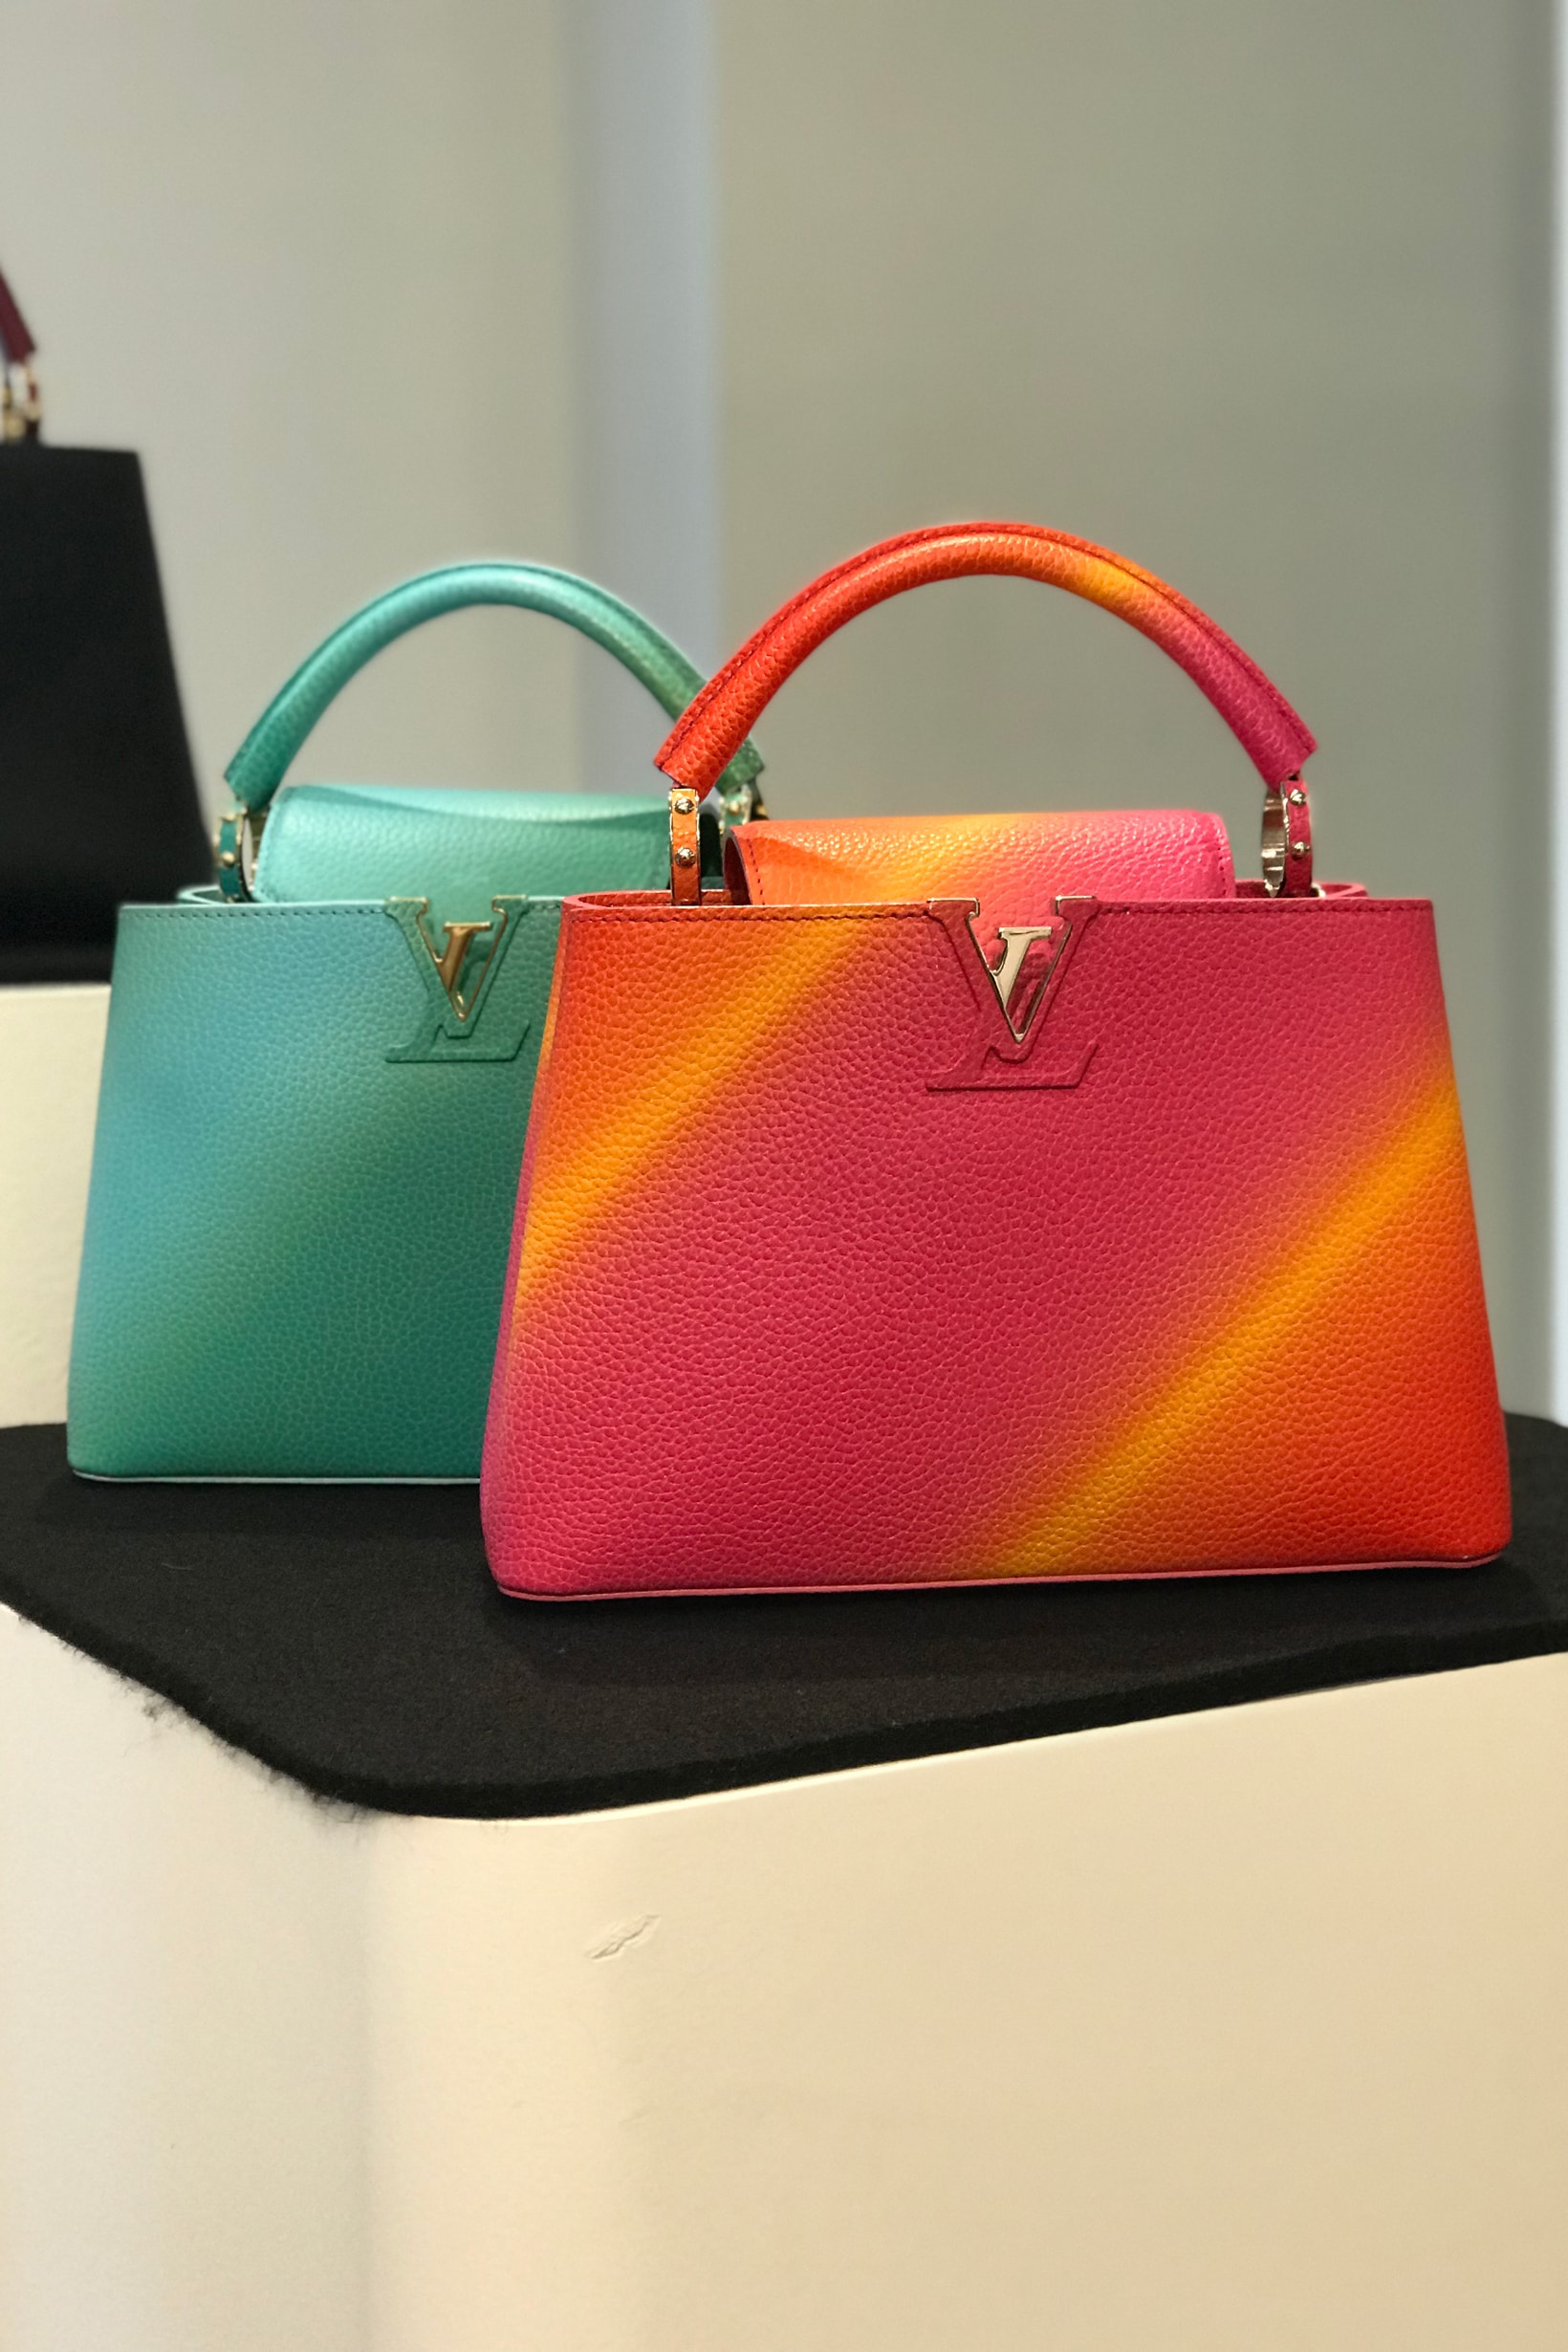 Louis Vuitton Fall Winter 2019 Closer Look Handbags Pink Orange Teal